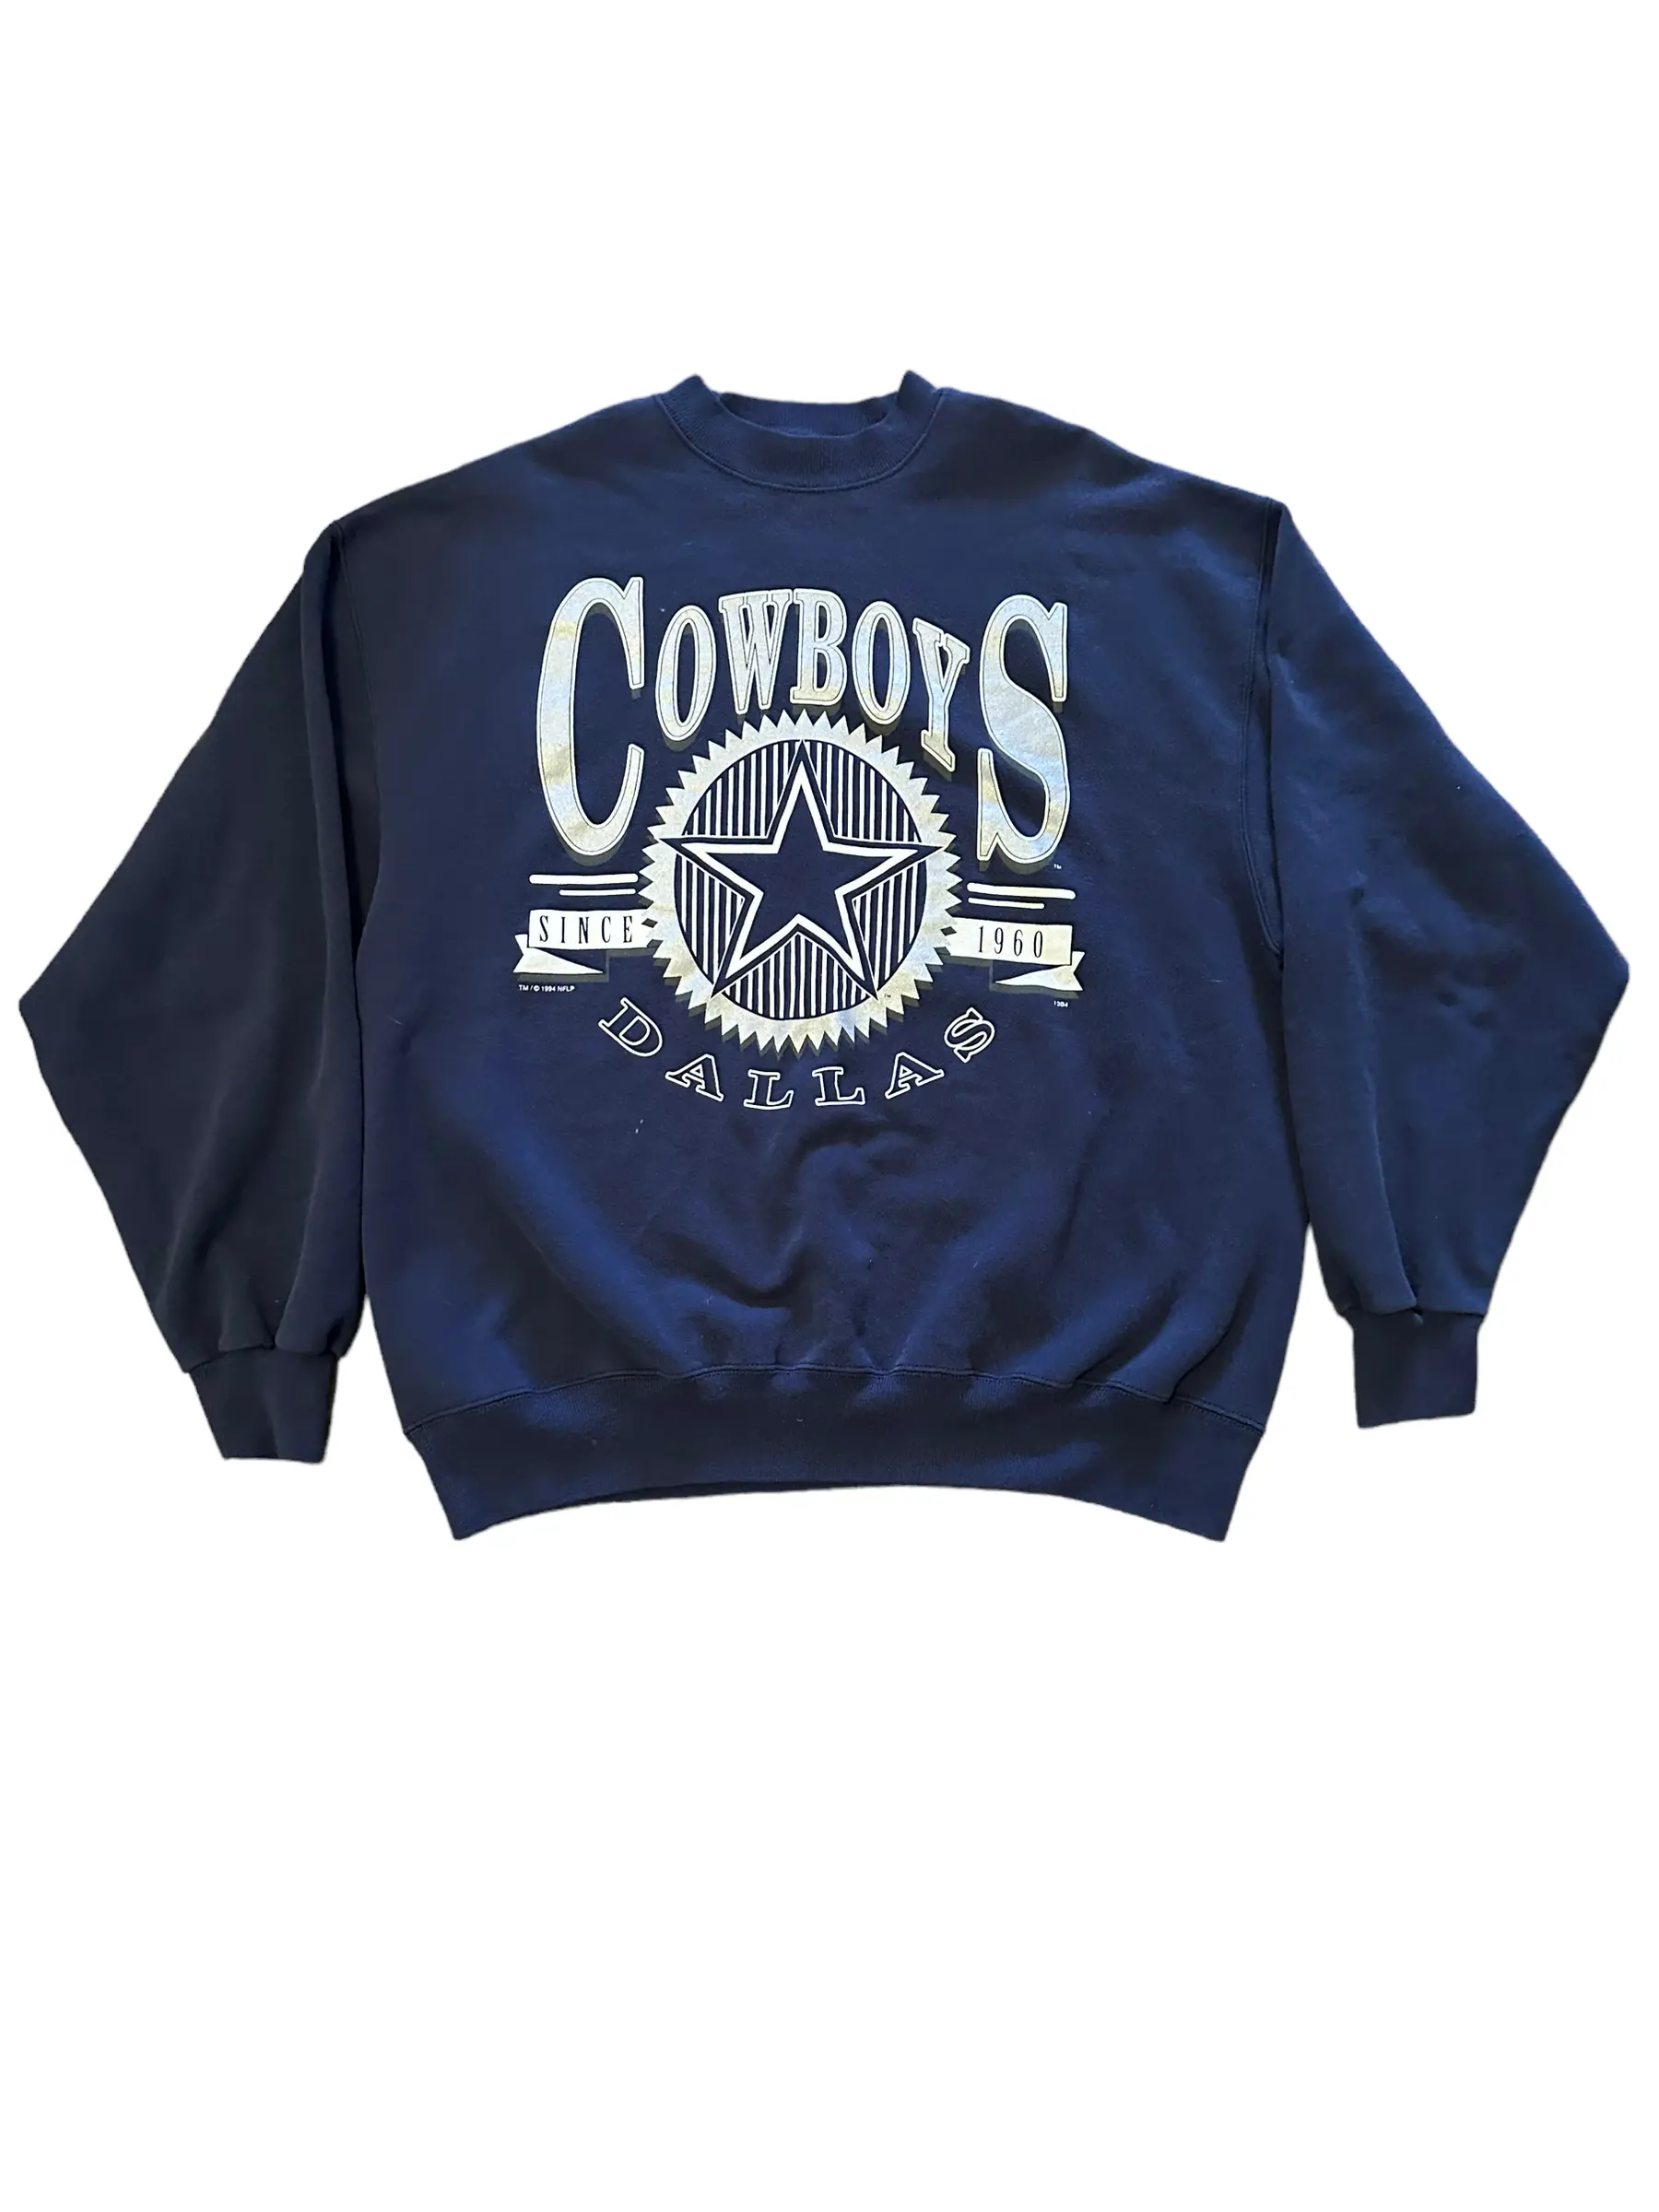 1994 Cowboys sweatshirt